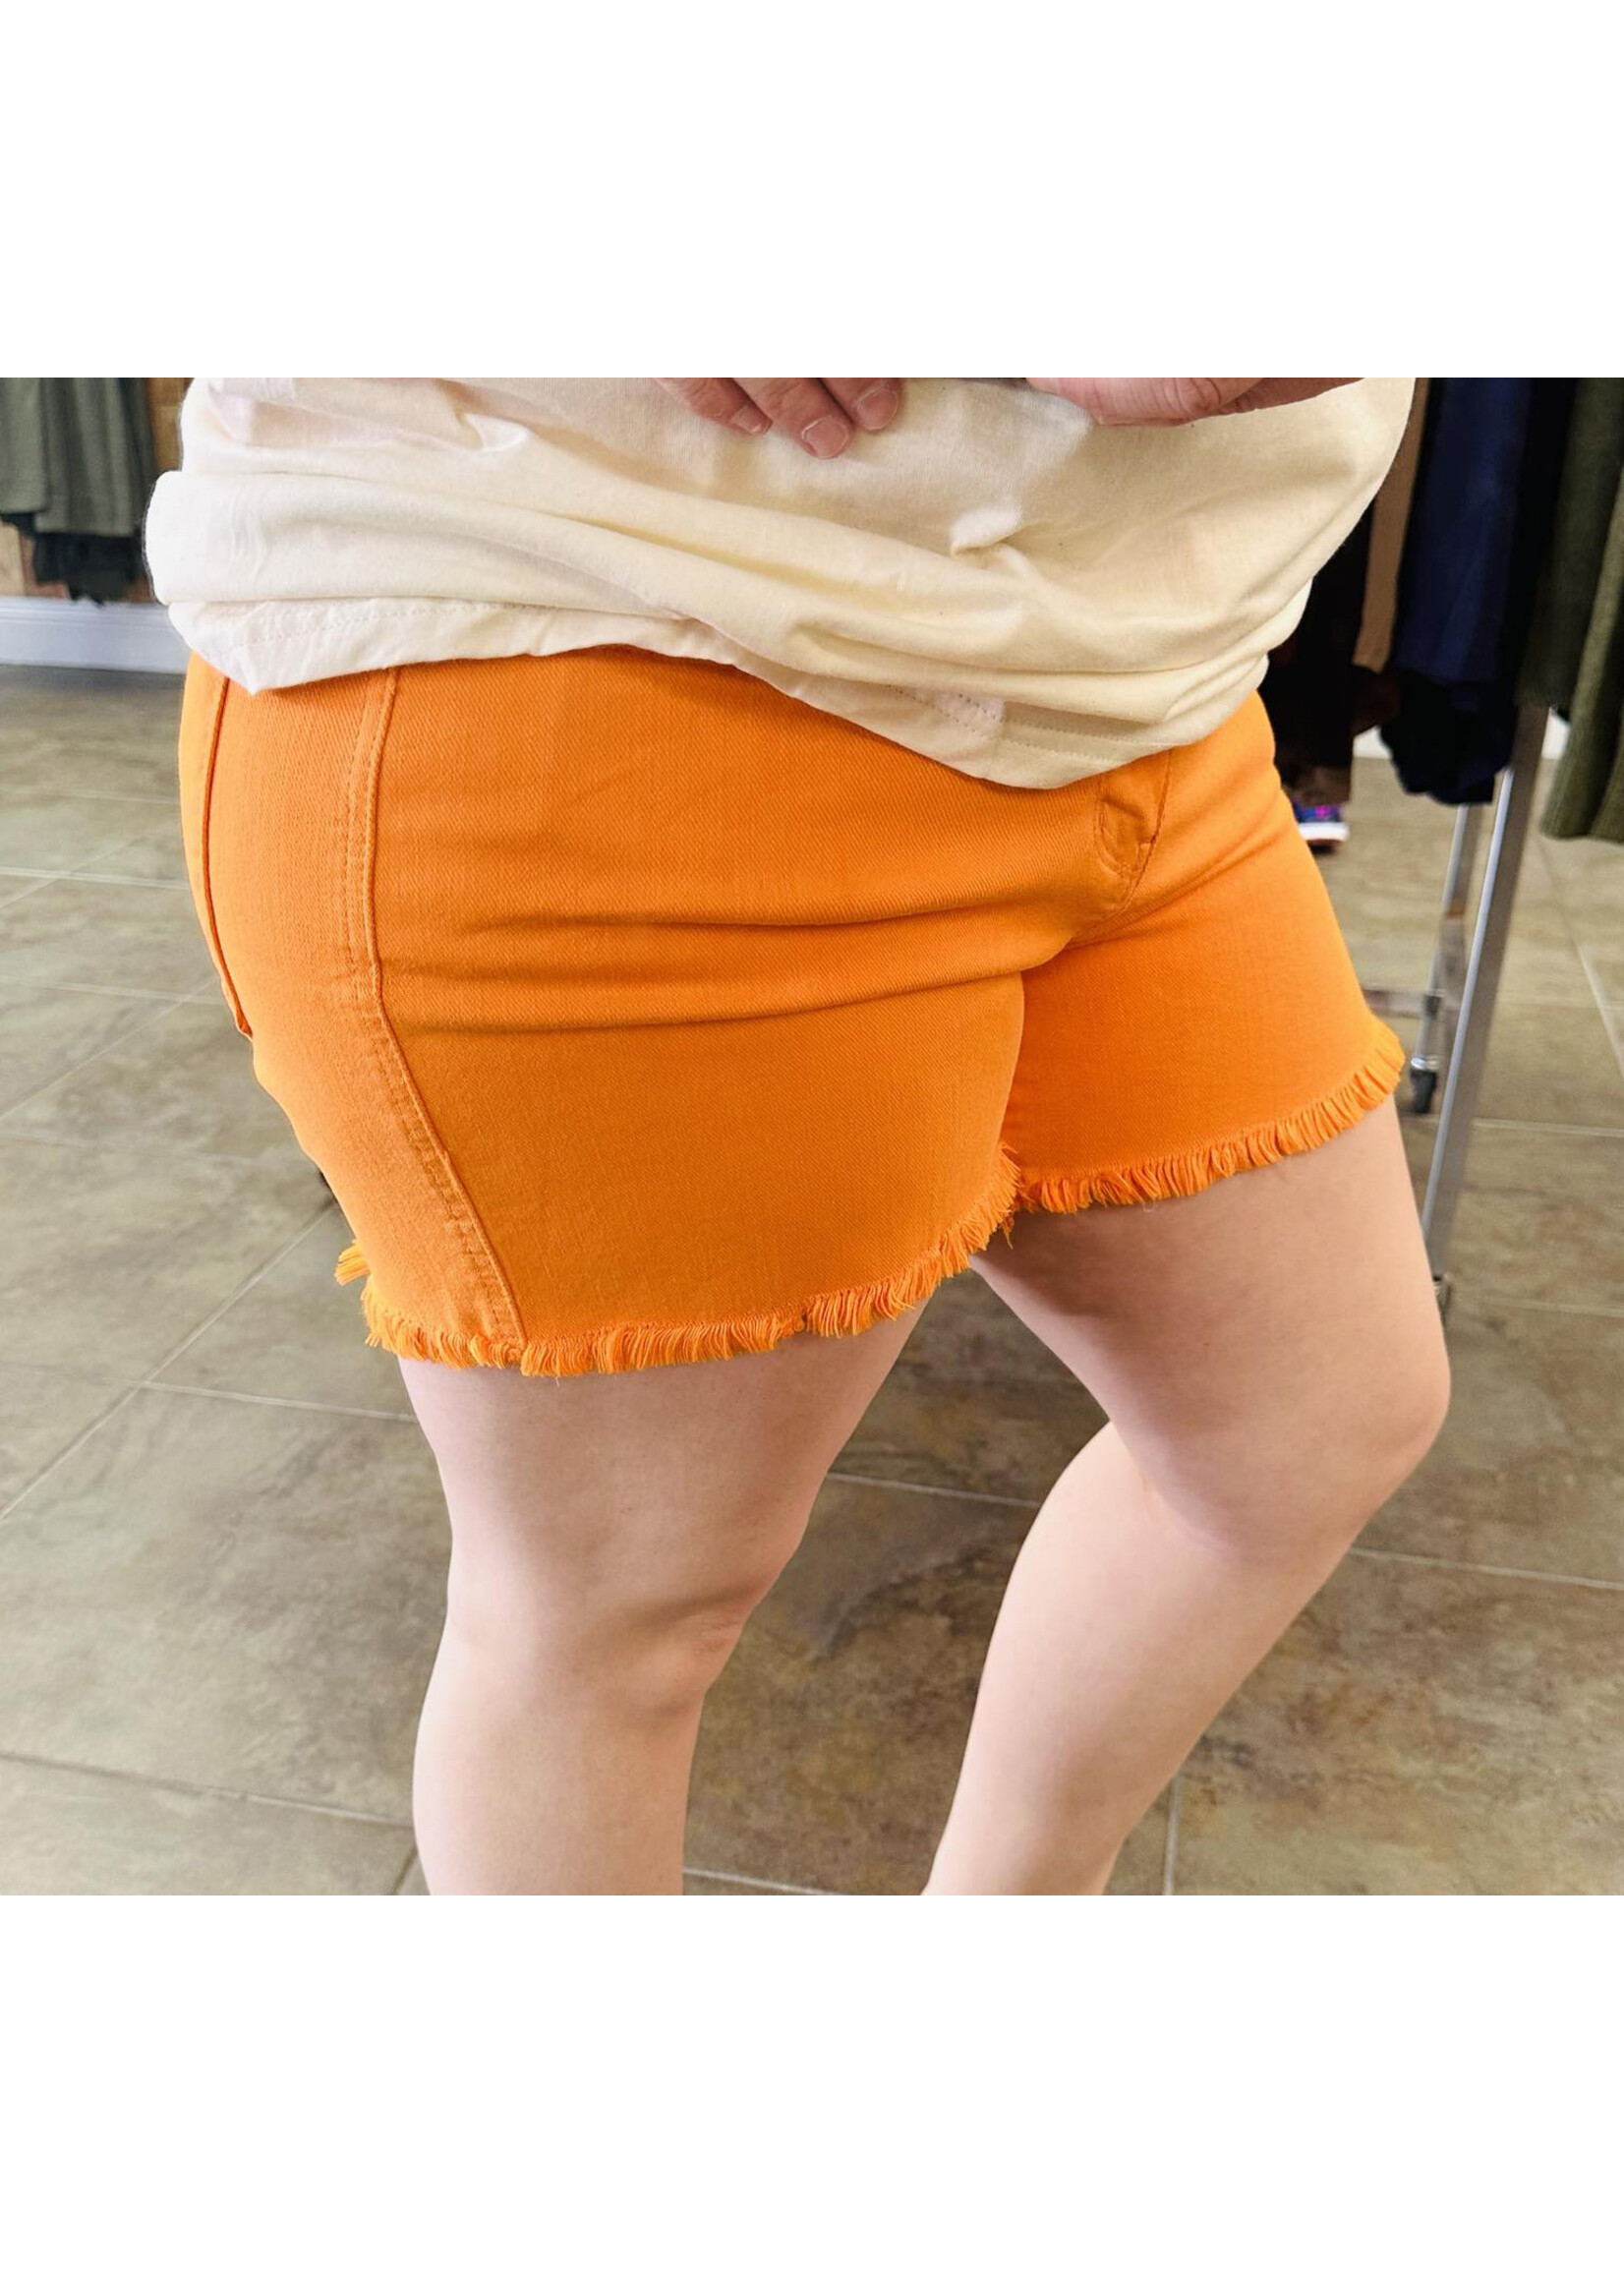 Judy Blue JB Orange Fray Shorts